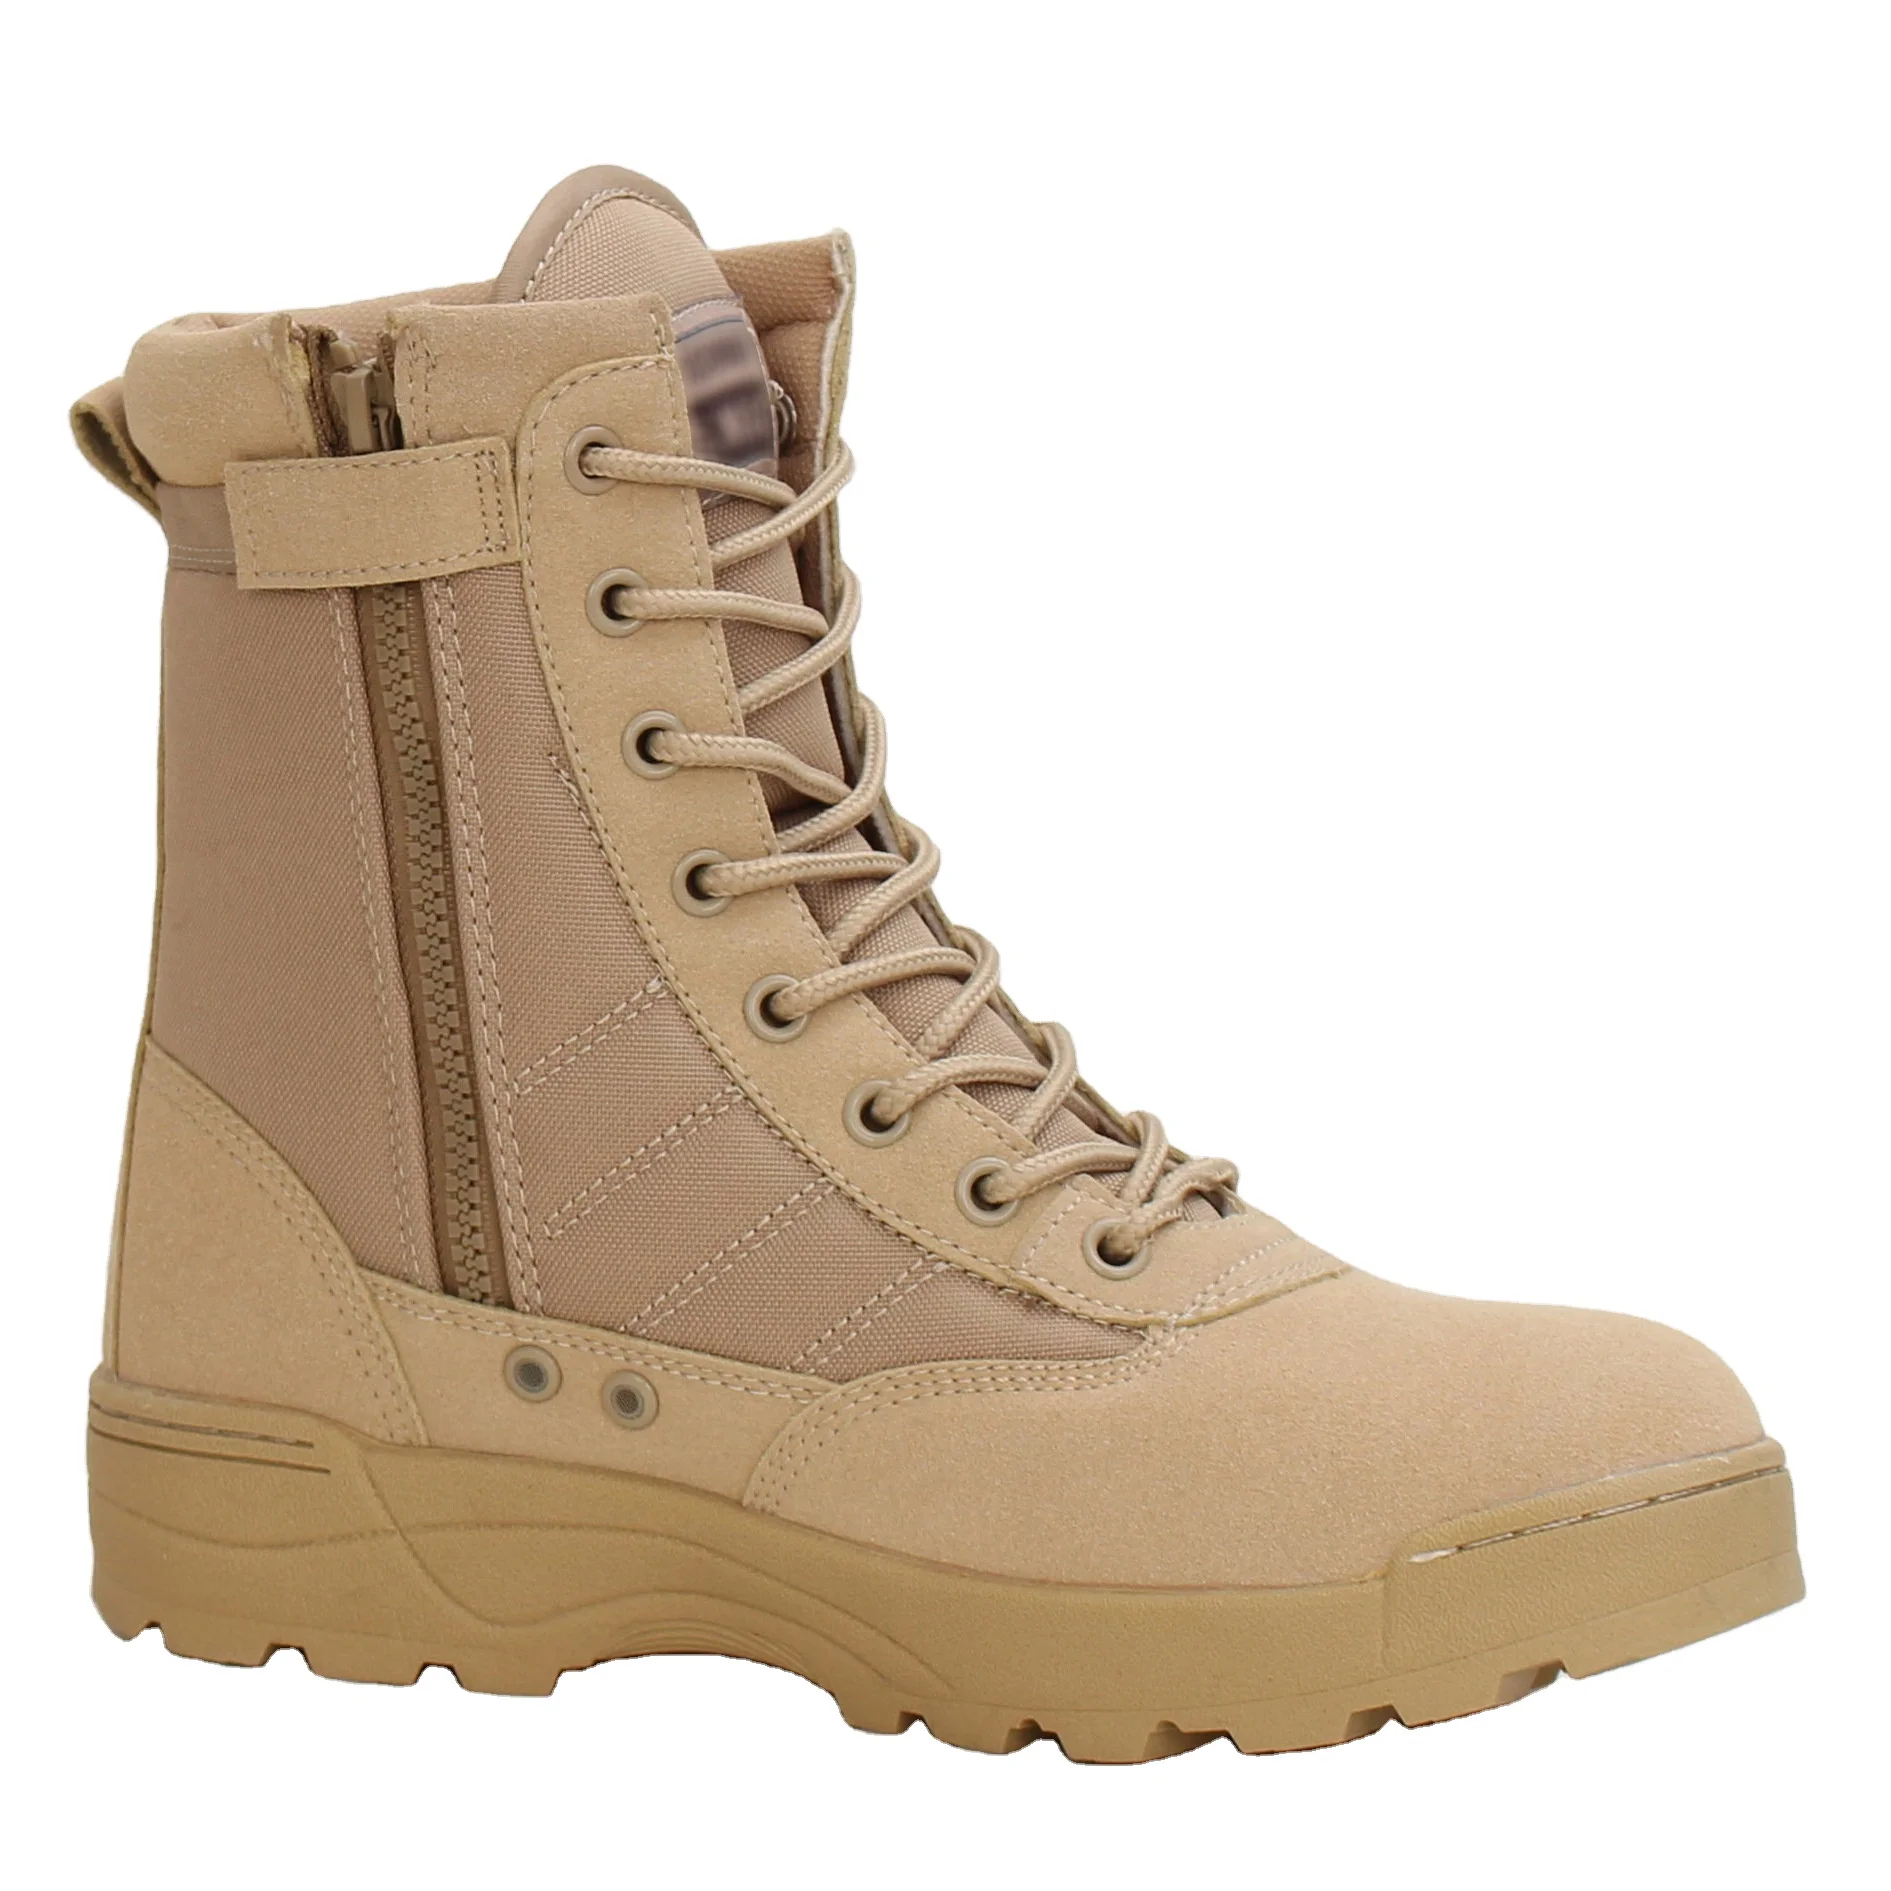 

CS034698 Outdoor military boots men's ultralight waterproof combat tactical boots desert boots, Colors as show/as request